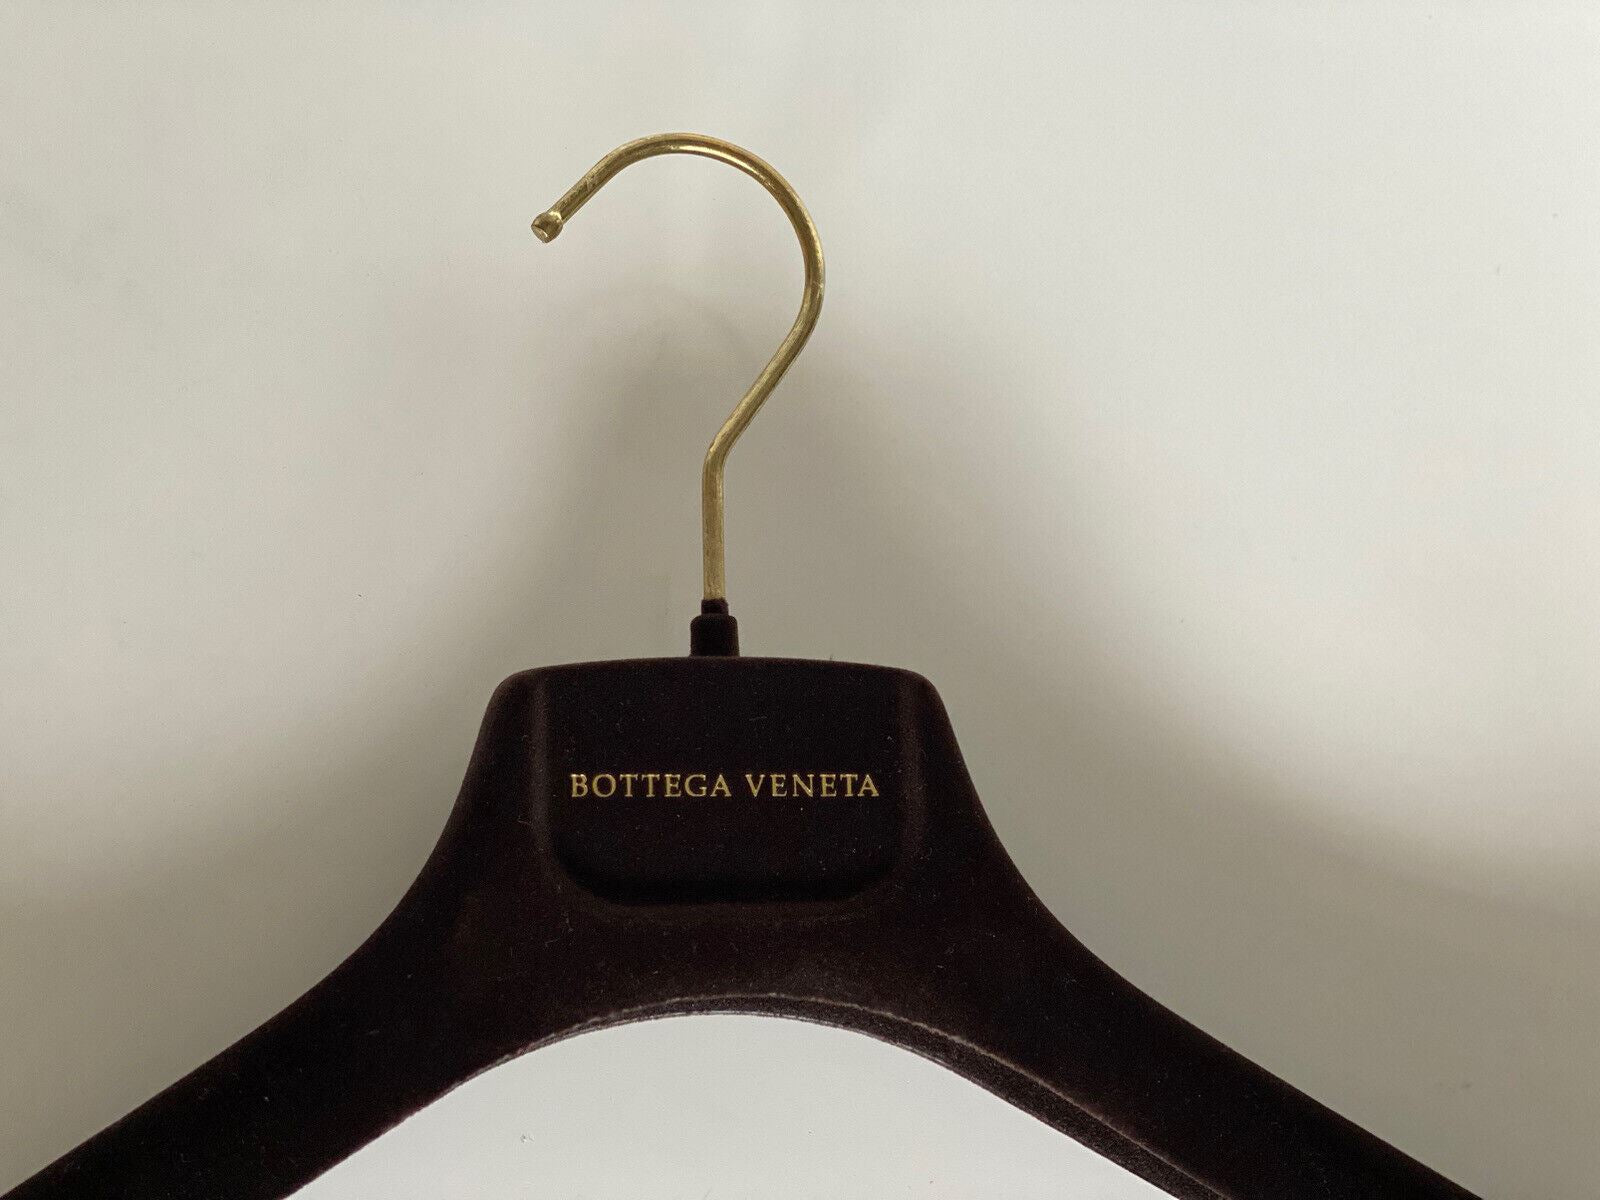 Bottega Veneta Pullover-/Kleiderbügel aus braunem Samt, goldfarbene Hardware, 14,2 x 5,7 x 1,7 